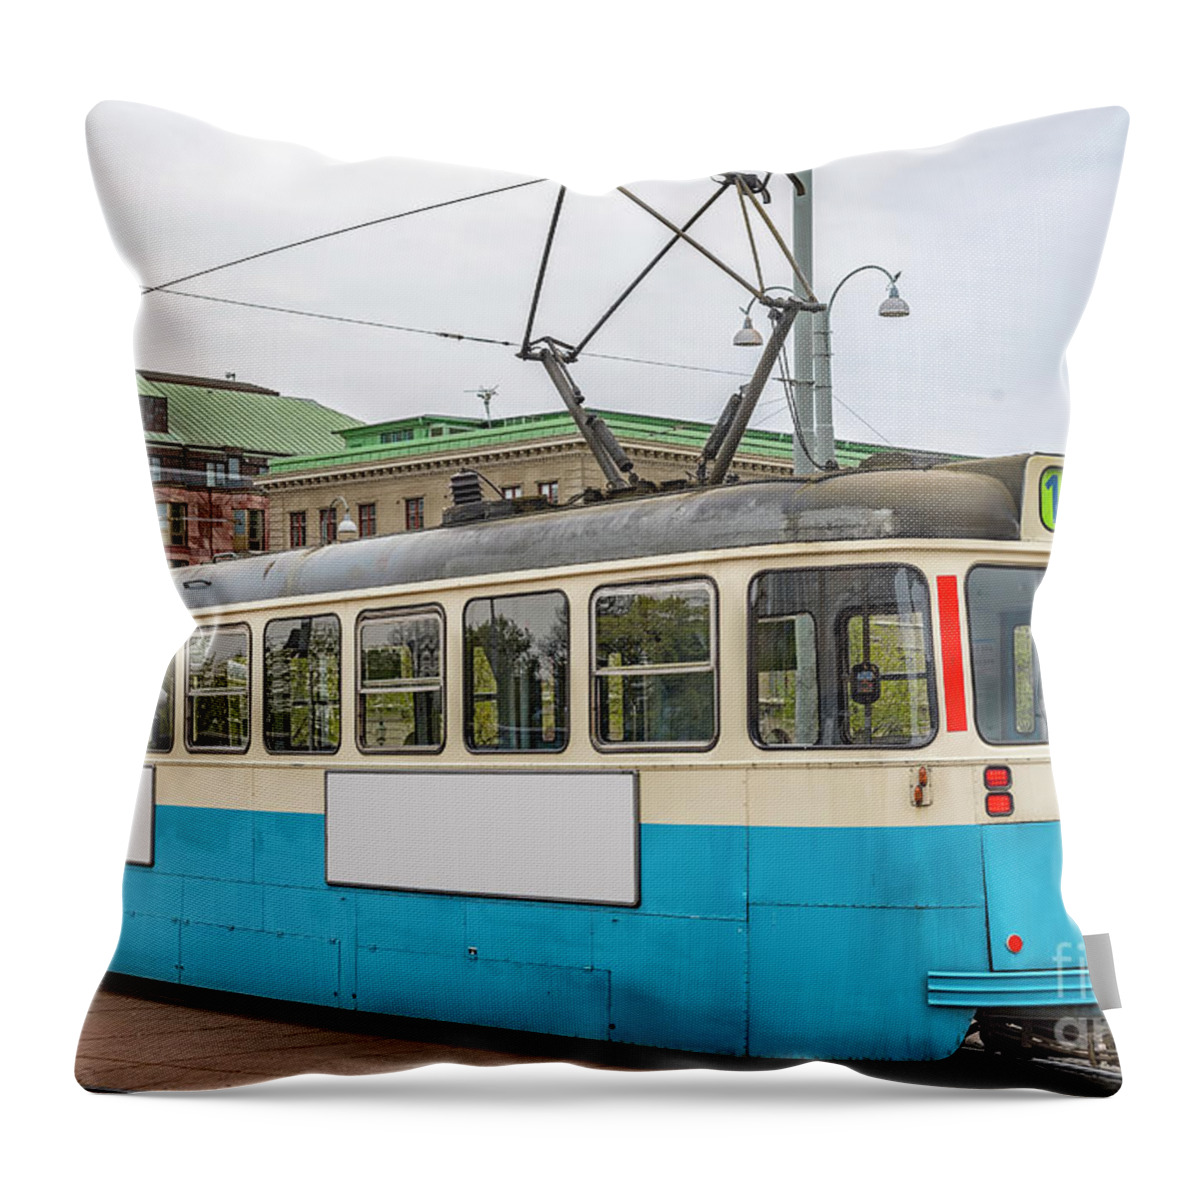 Tram Throw Pillow featuring the photograph Gothenburg Tram Car by Antony McAulay